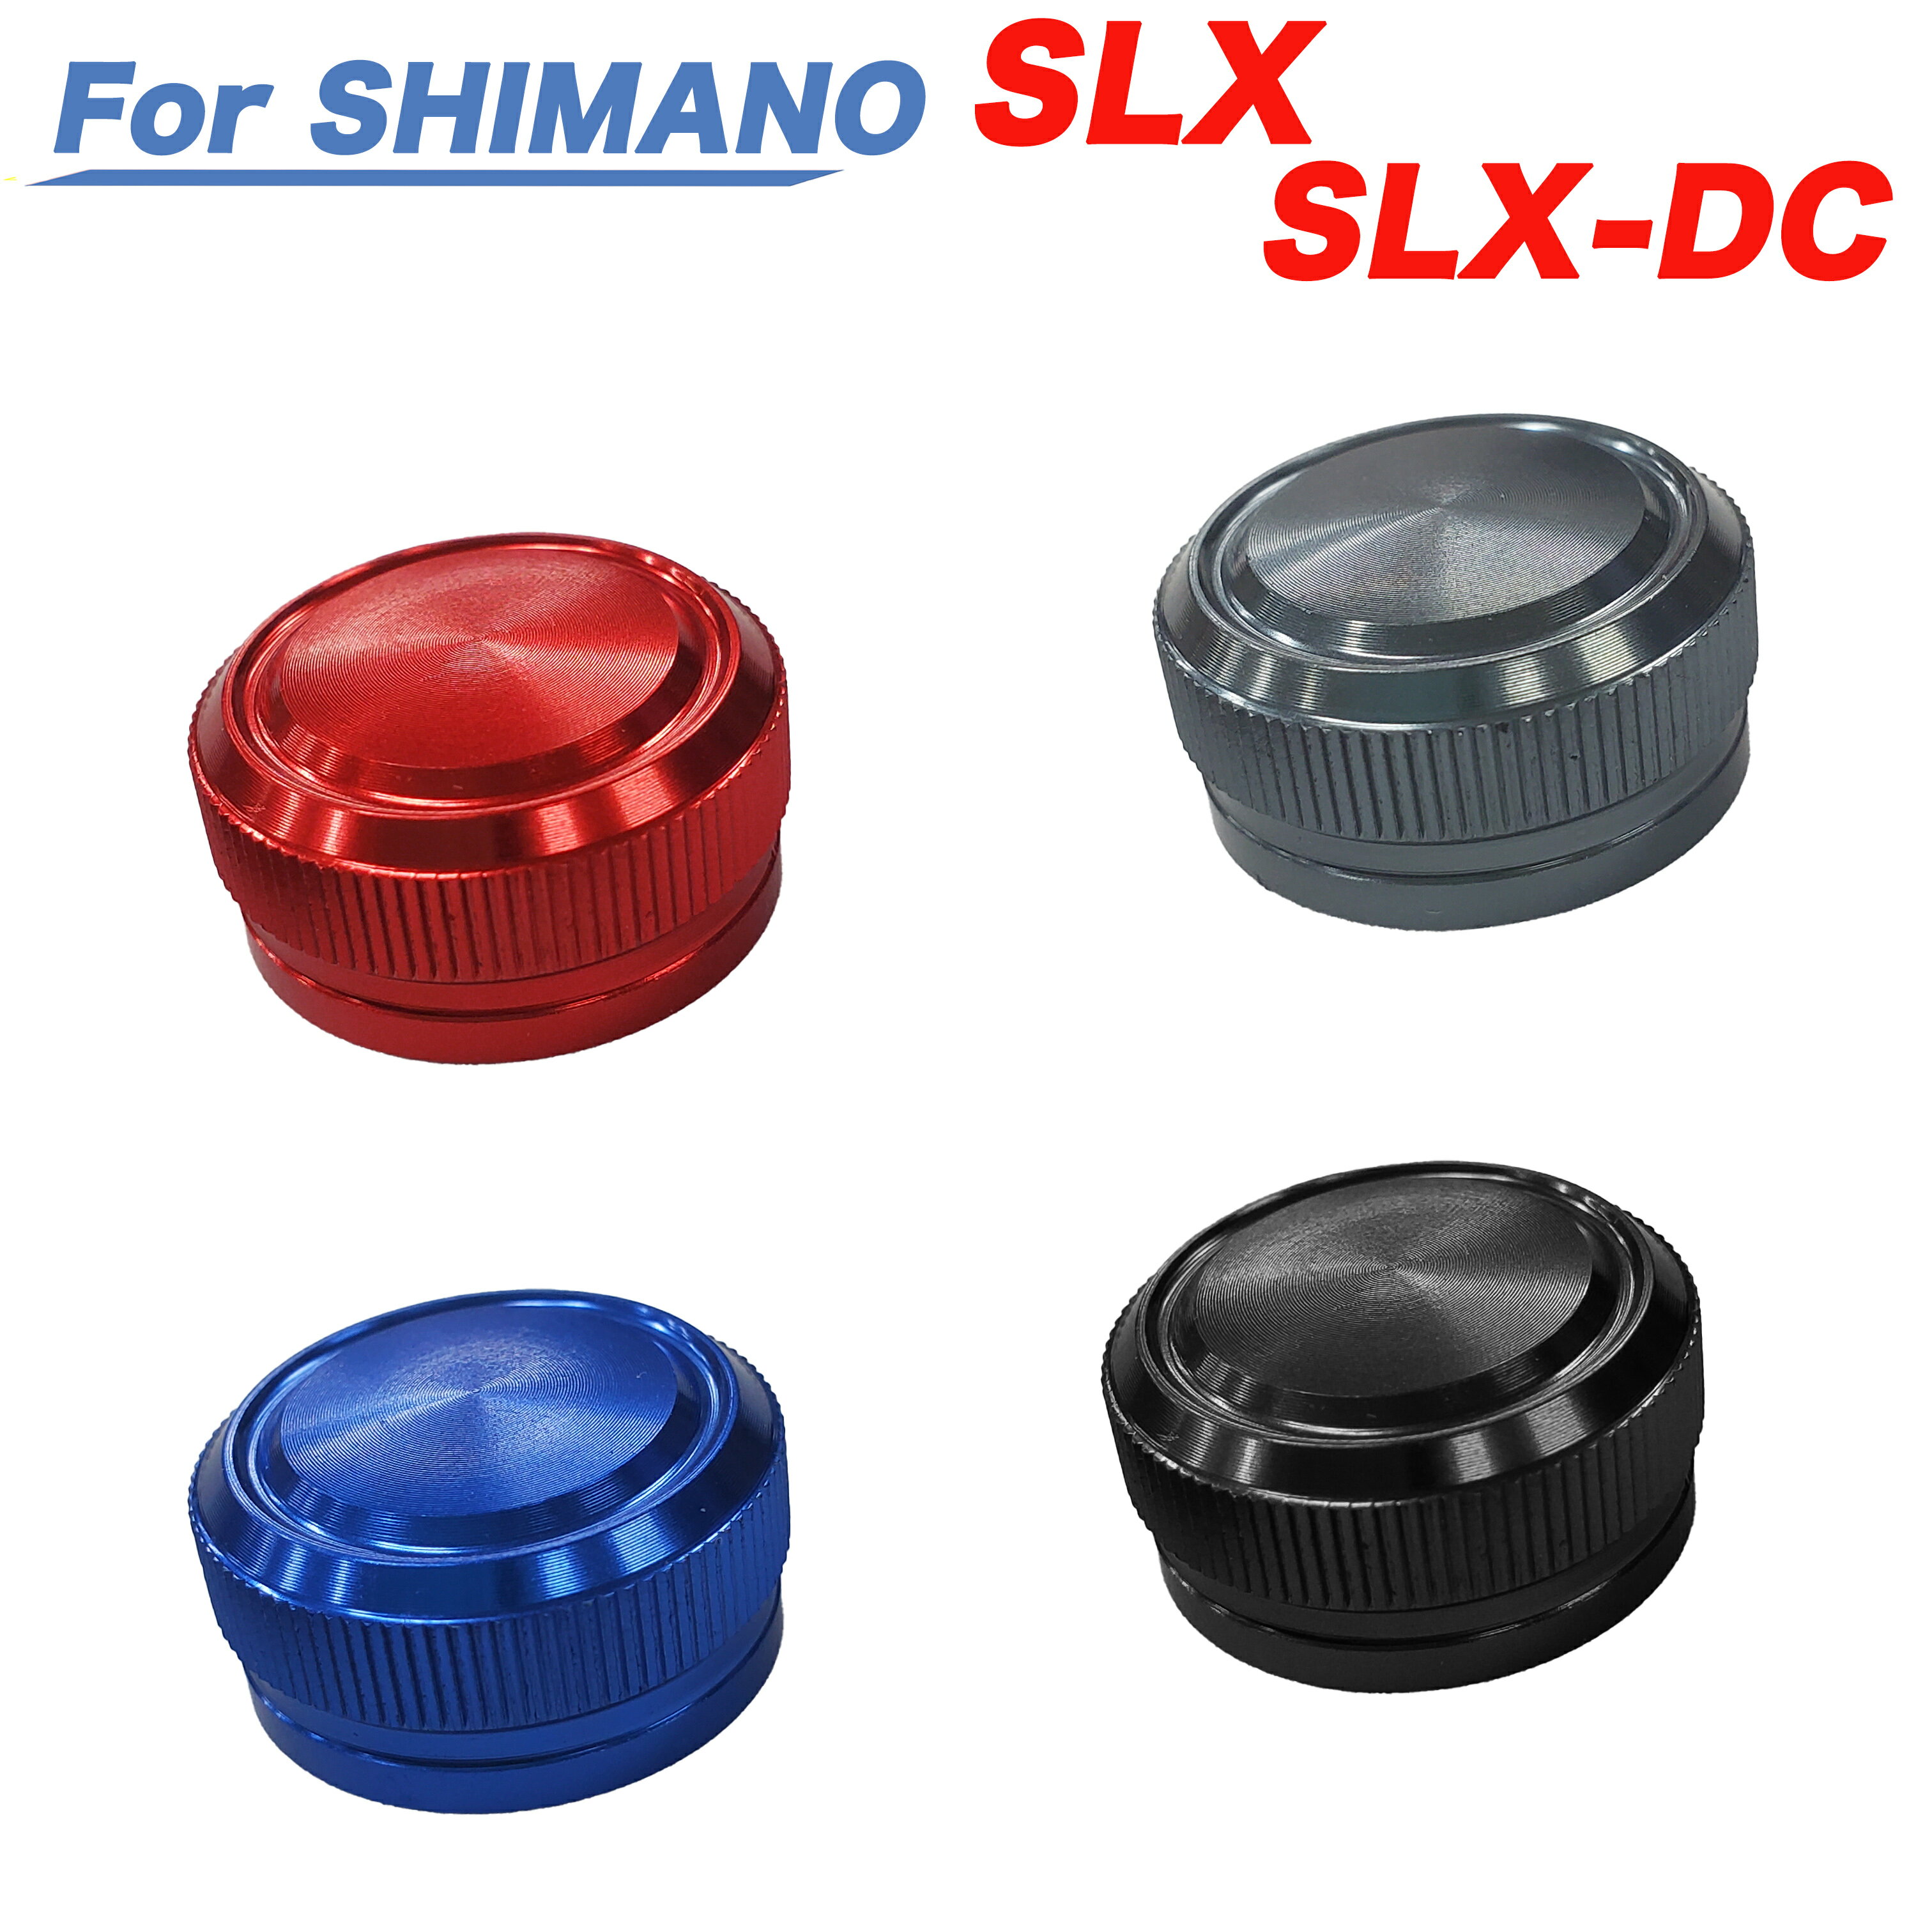 For シマノ SHIMANO SLX/SLX DC ベイトリール メカニカルブレーキノブ ベイトリール改造パーツ